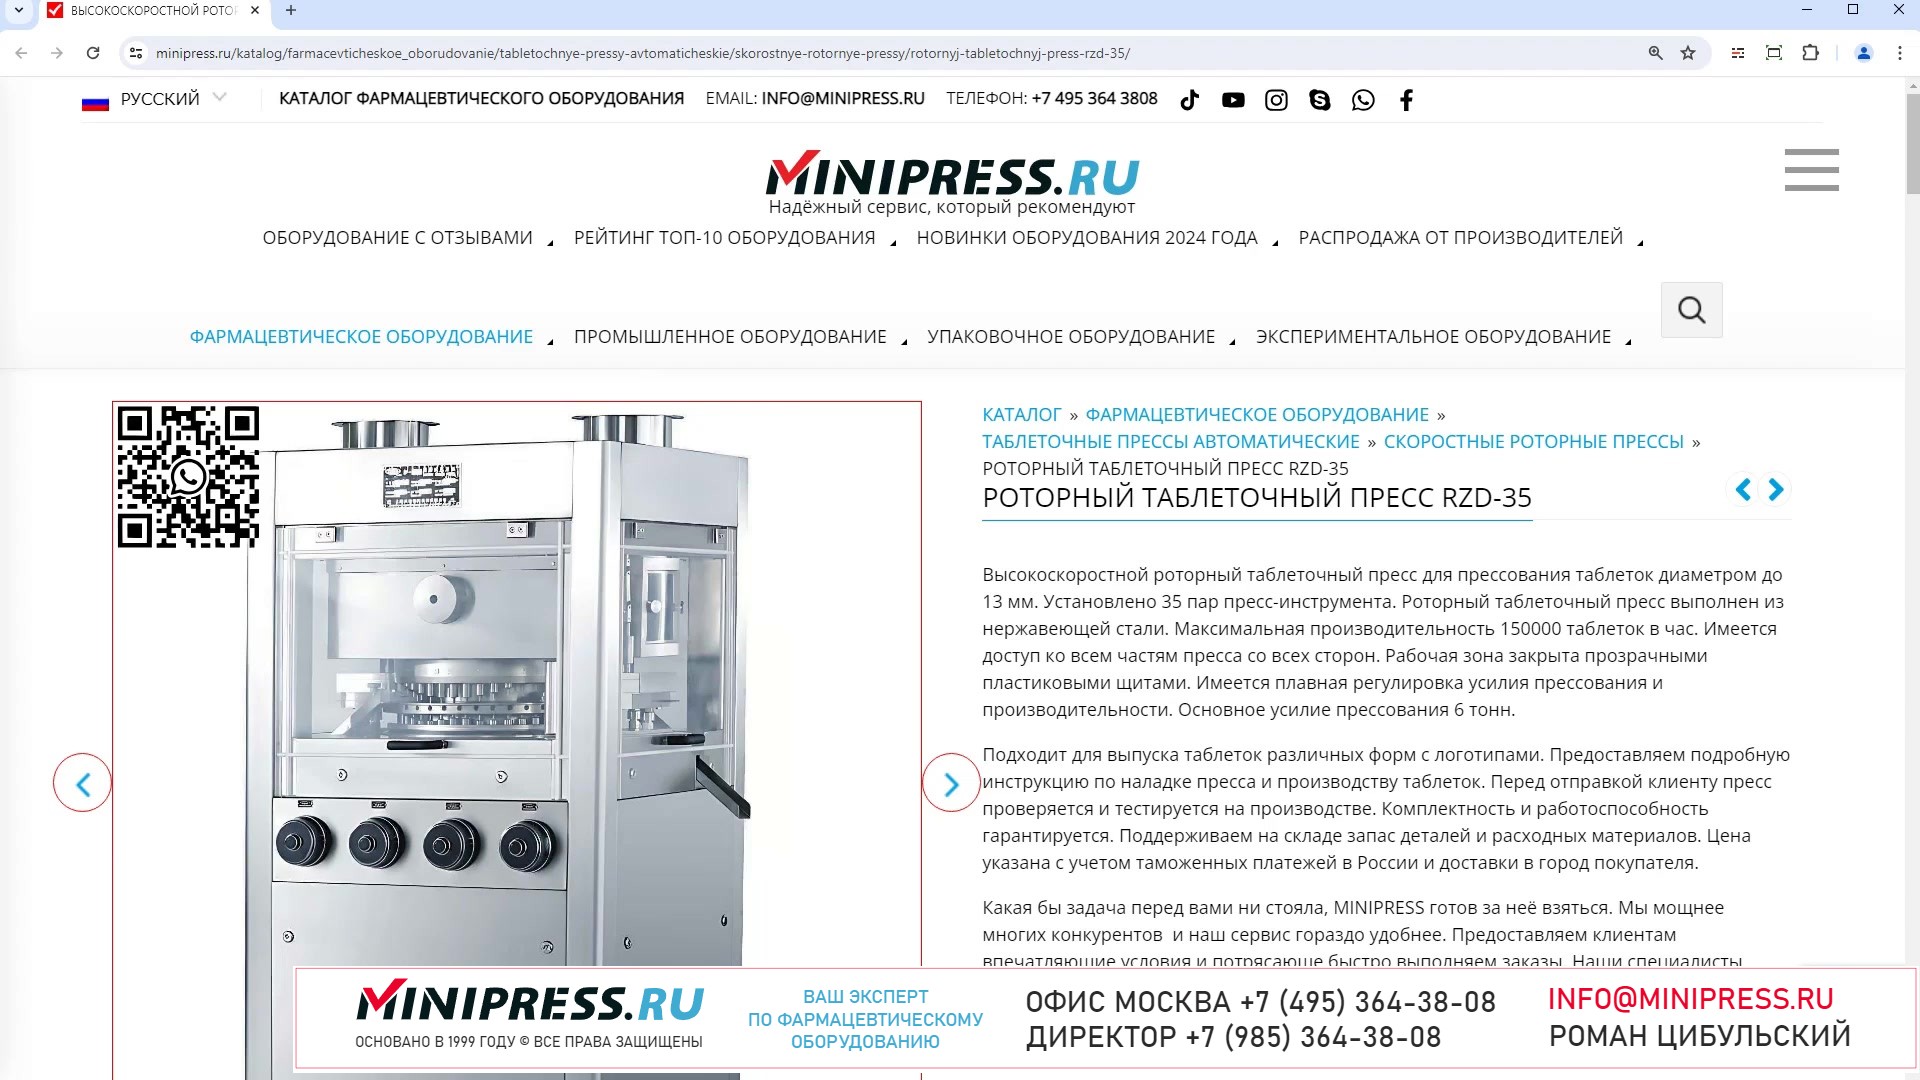 Minipress.ru Роторный таблеточный пресс RZD-35